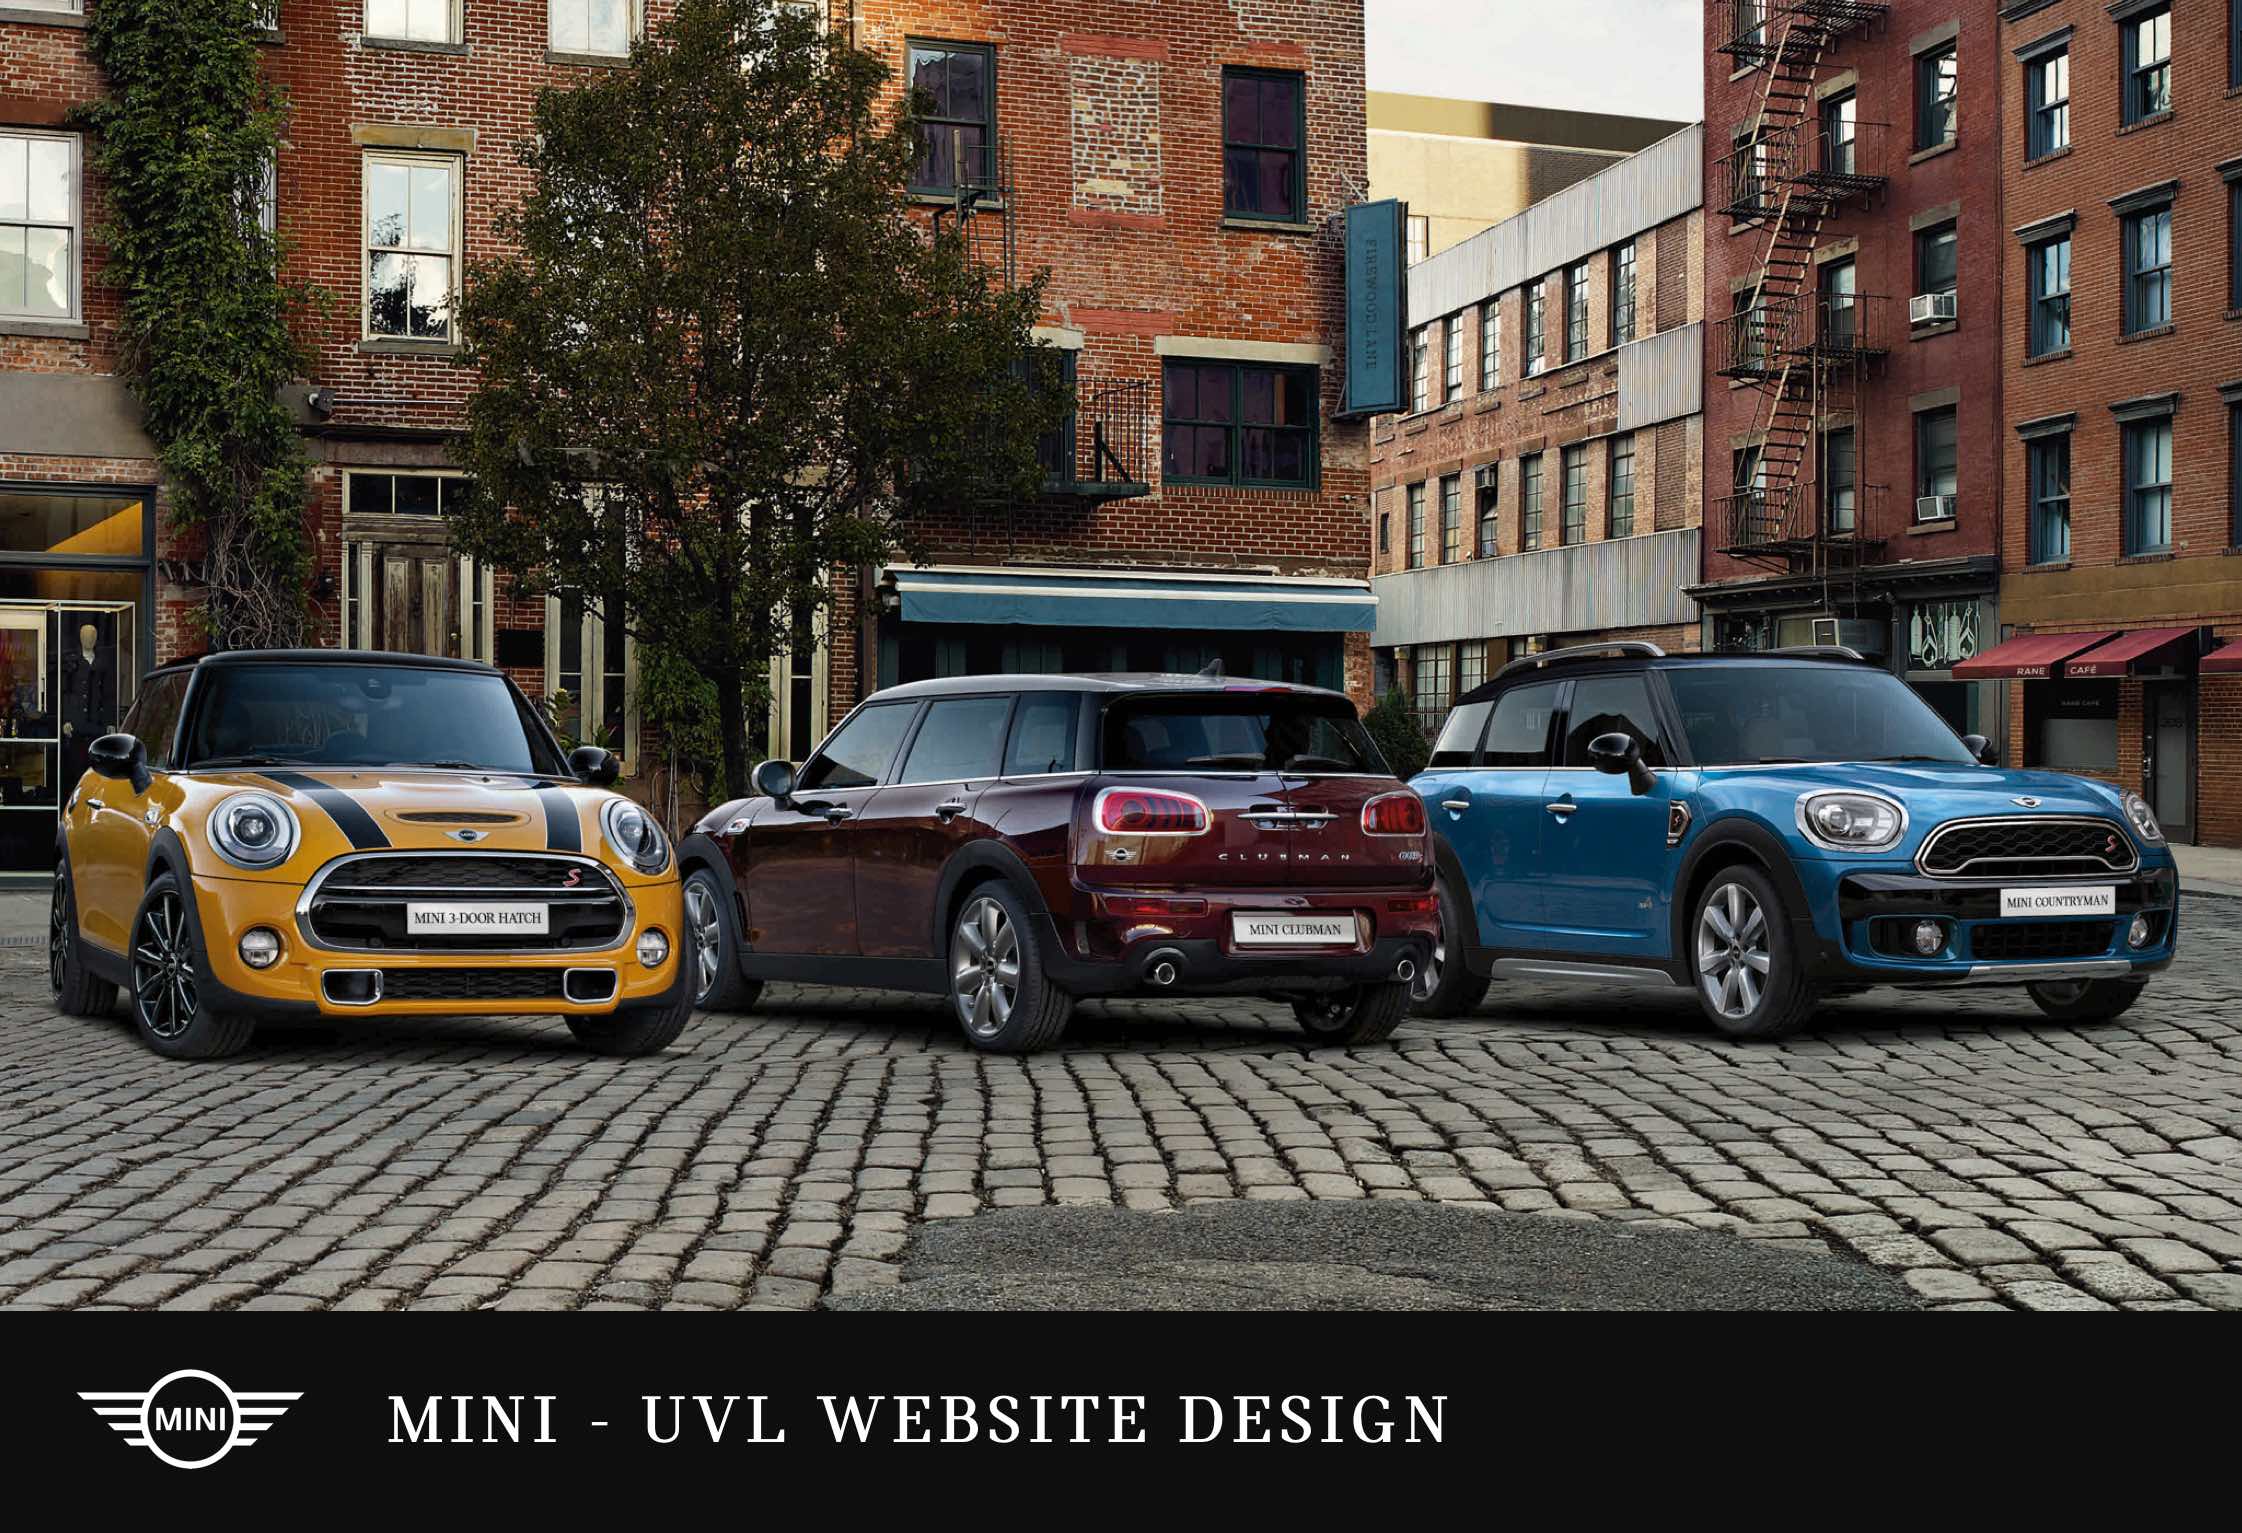 MINI - UVL website design, Experience Lead